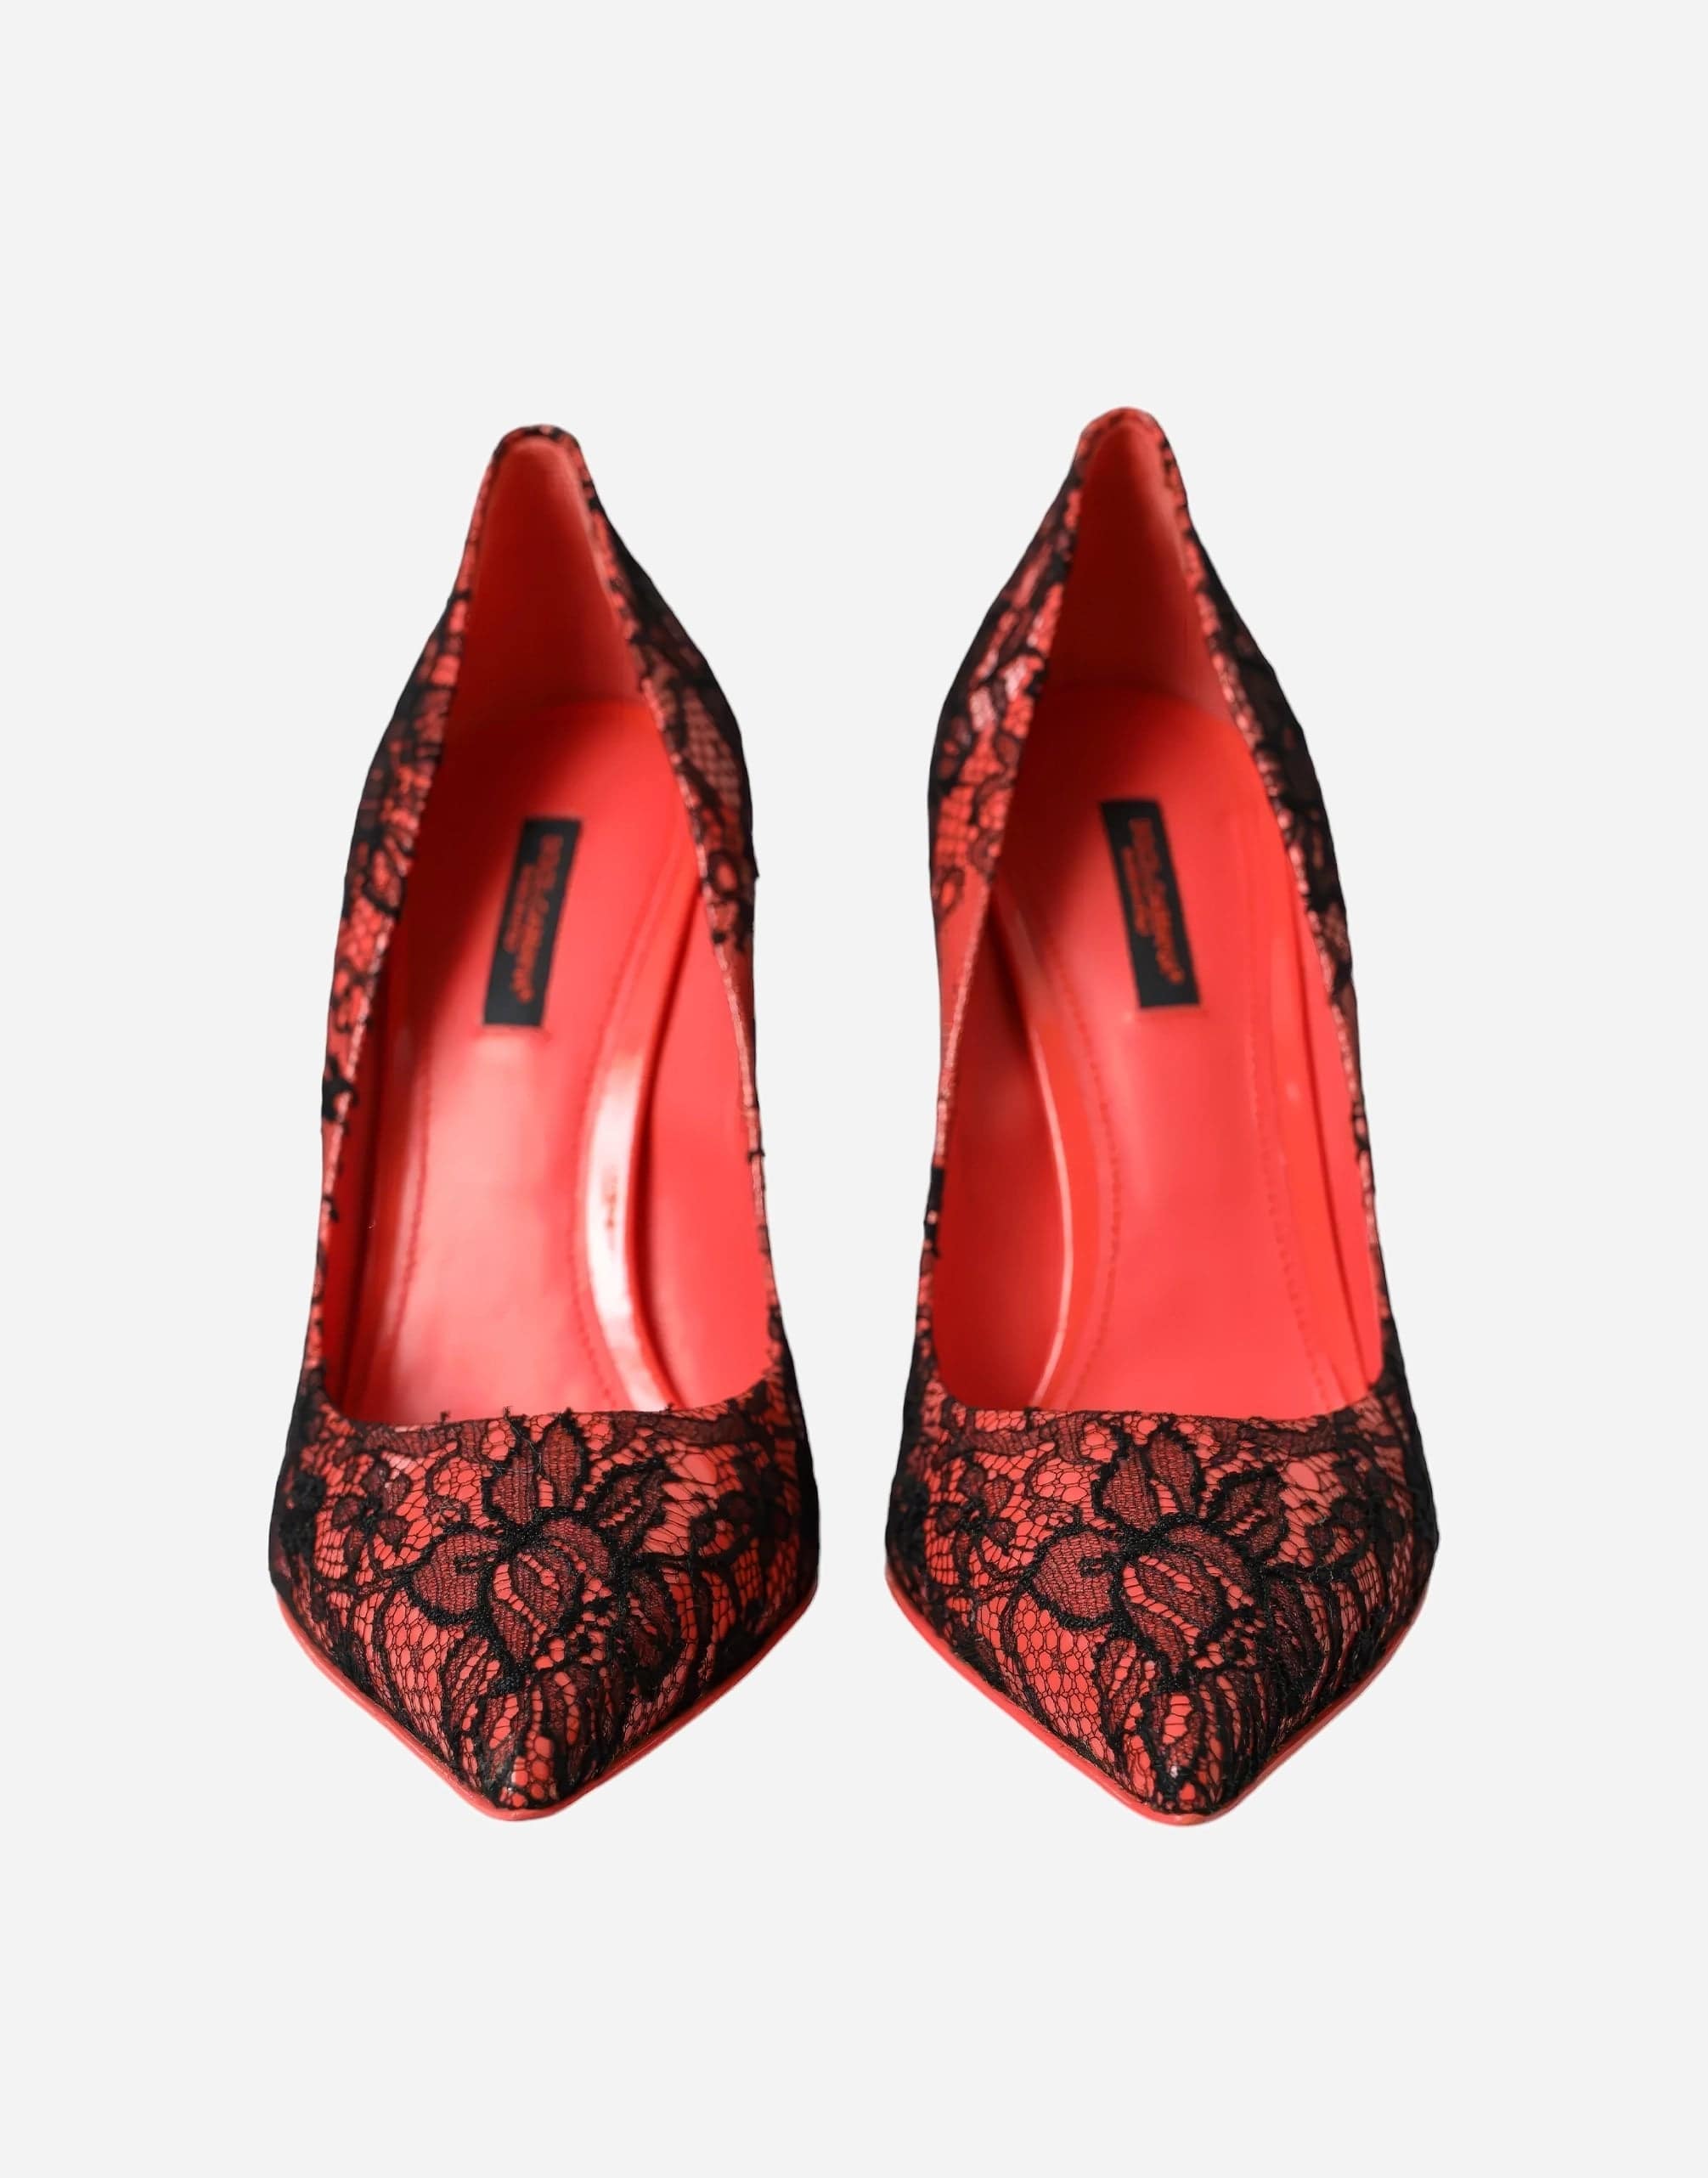 Dolce & Gabbana Patent Leather Lace Pumps